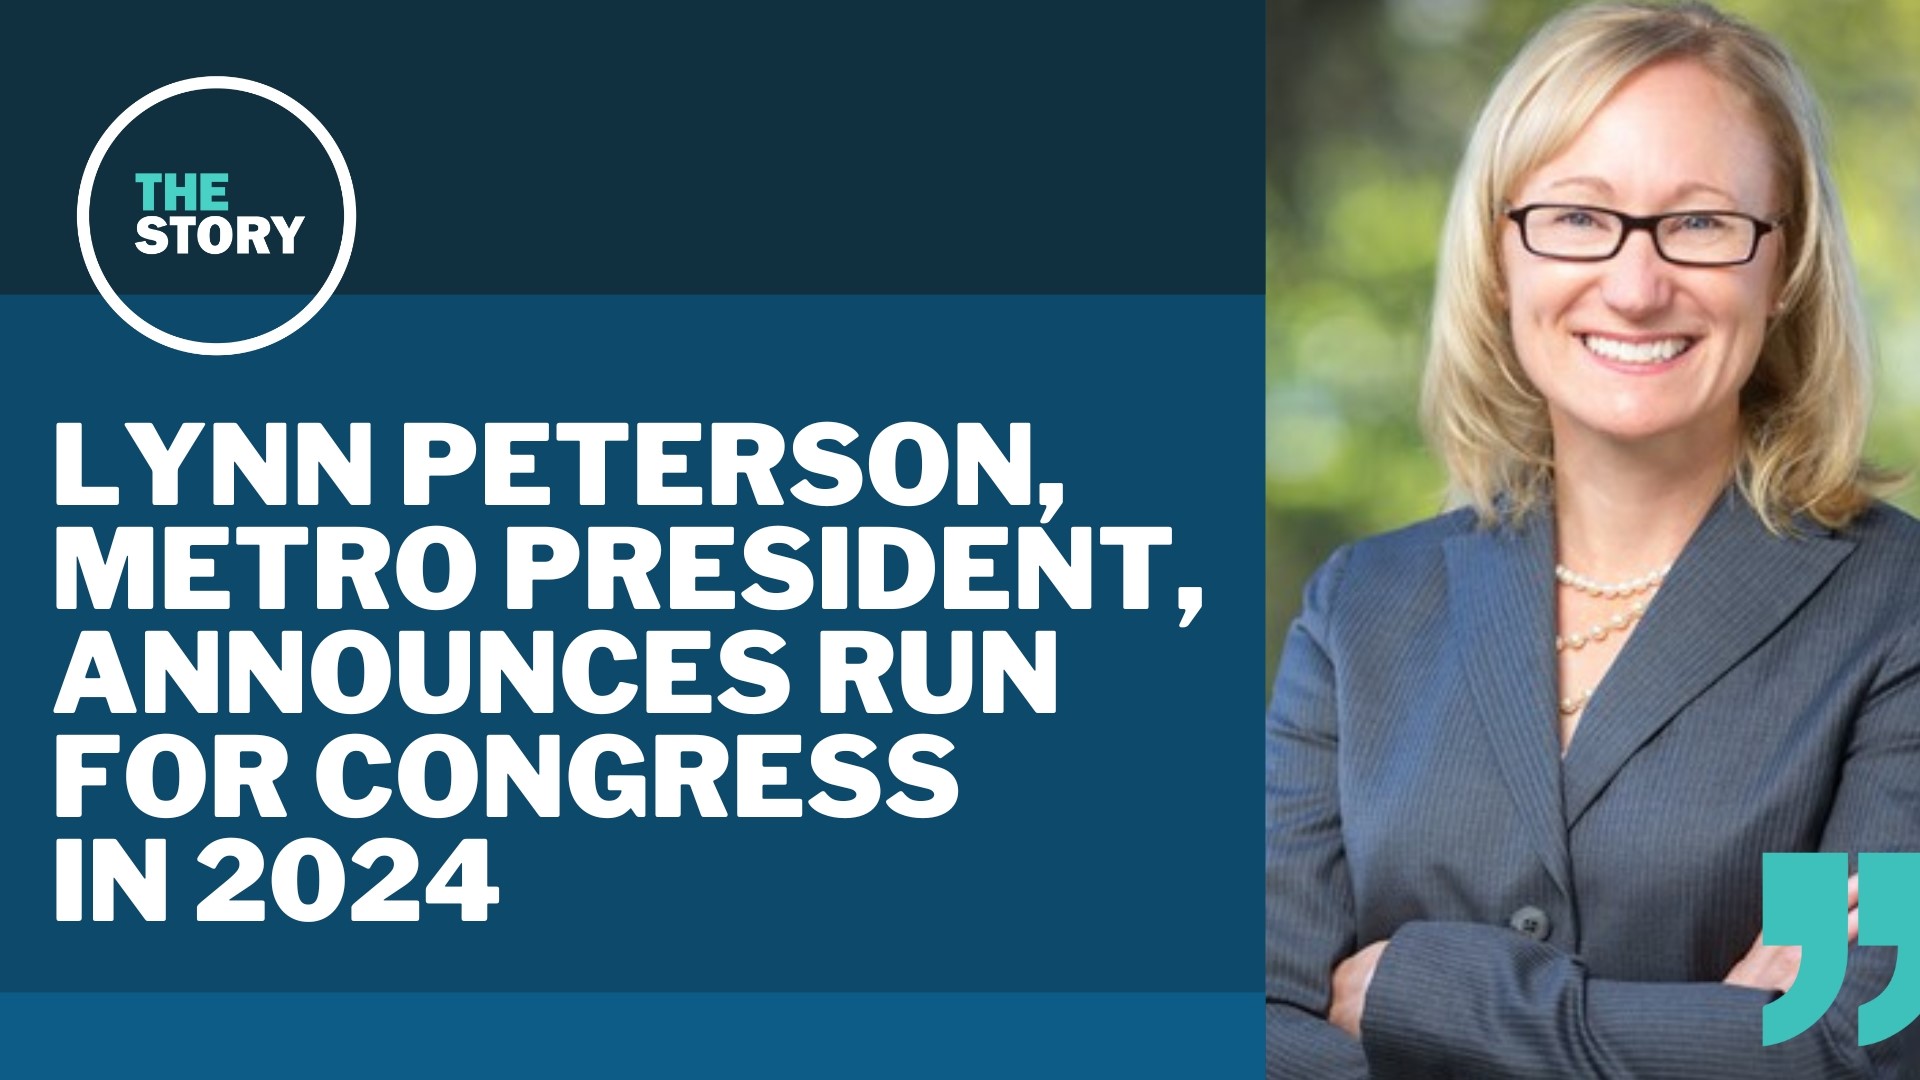 Metro President Lynn Peterson hopes to unseat freshman Republican Congresswoman Lori Chavez-Deremer in Oregon's House District 5.